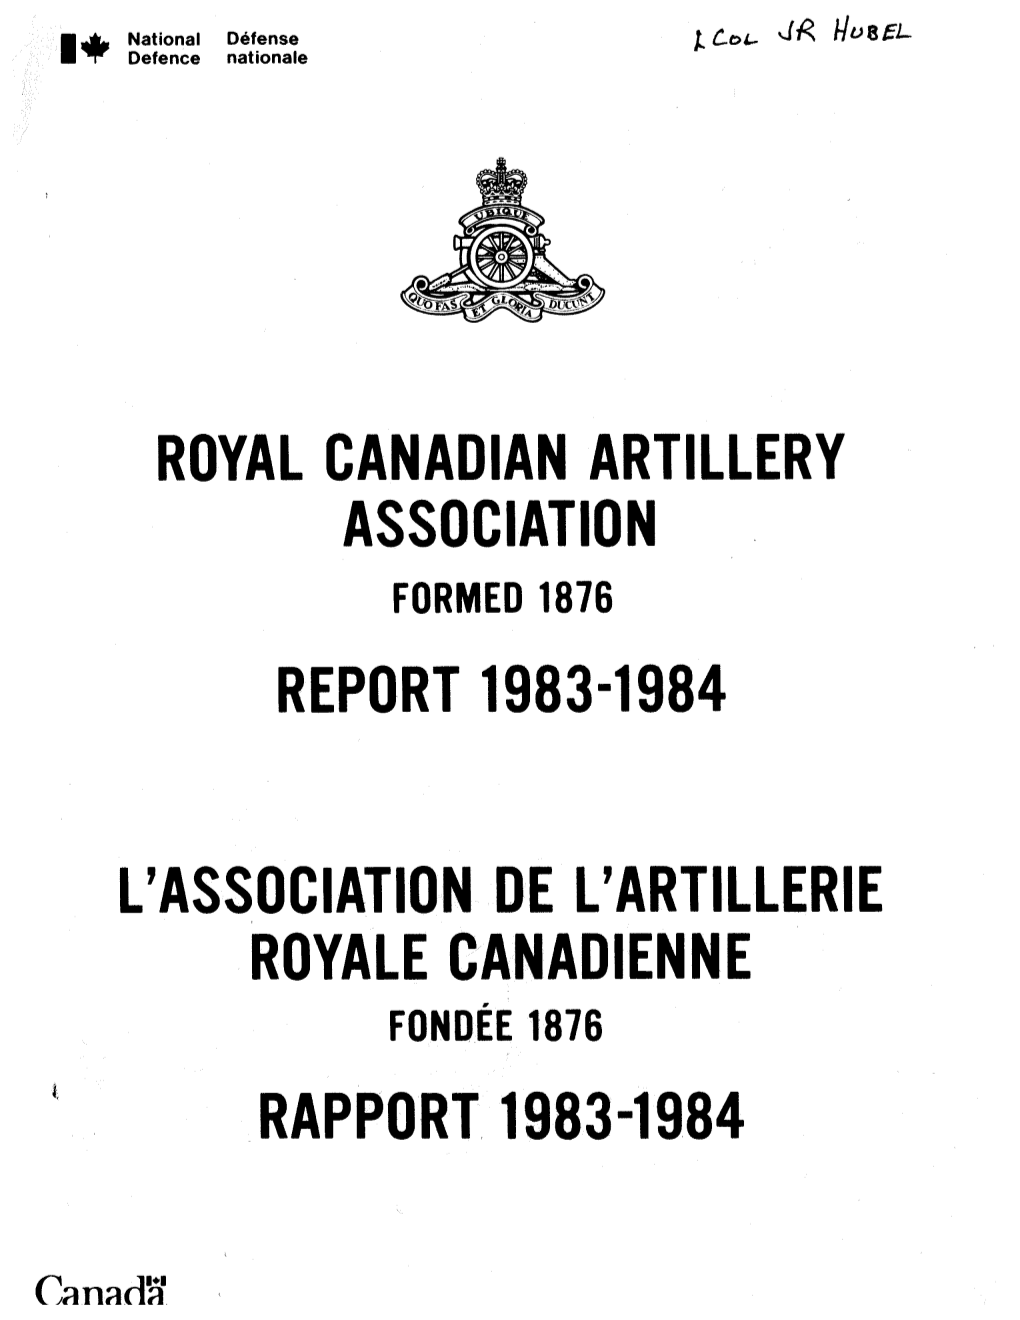 Royal Canadian Artillery Association Report 1983